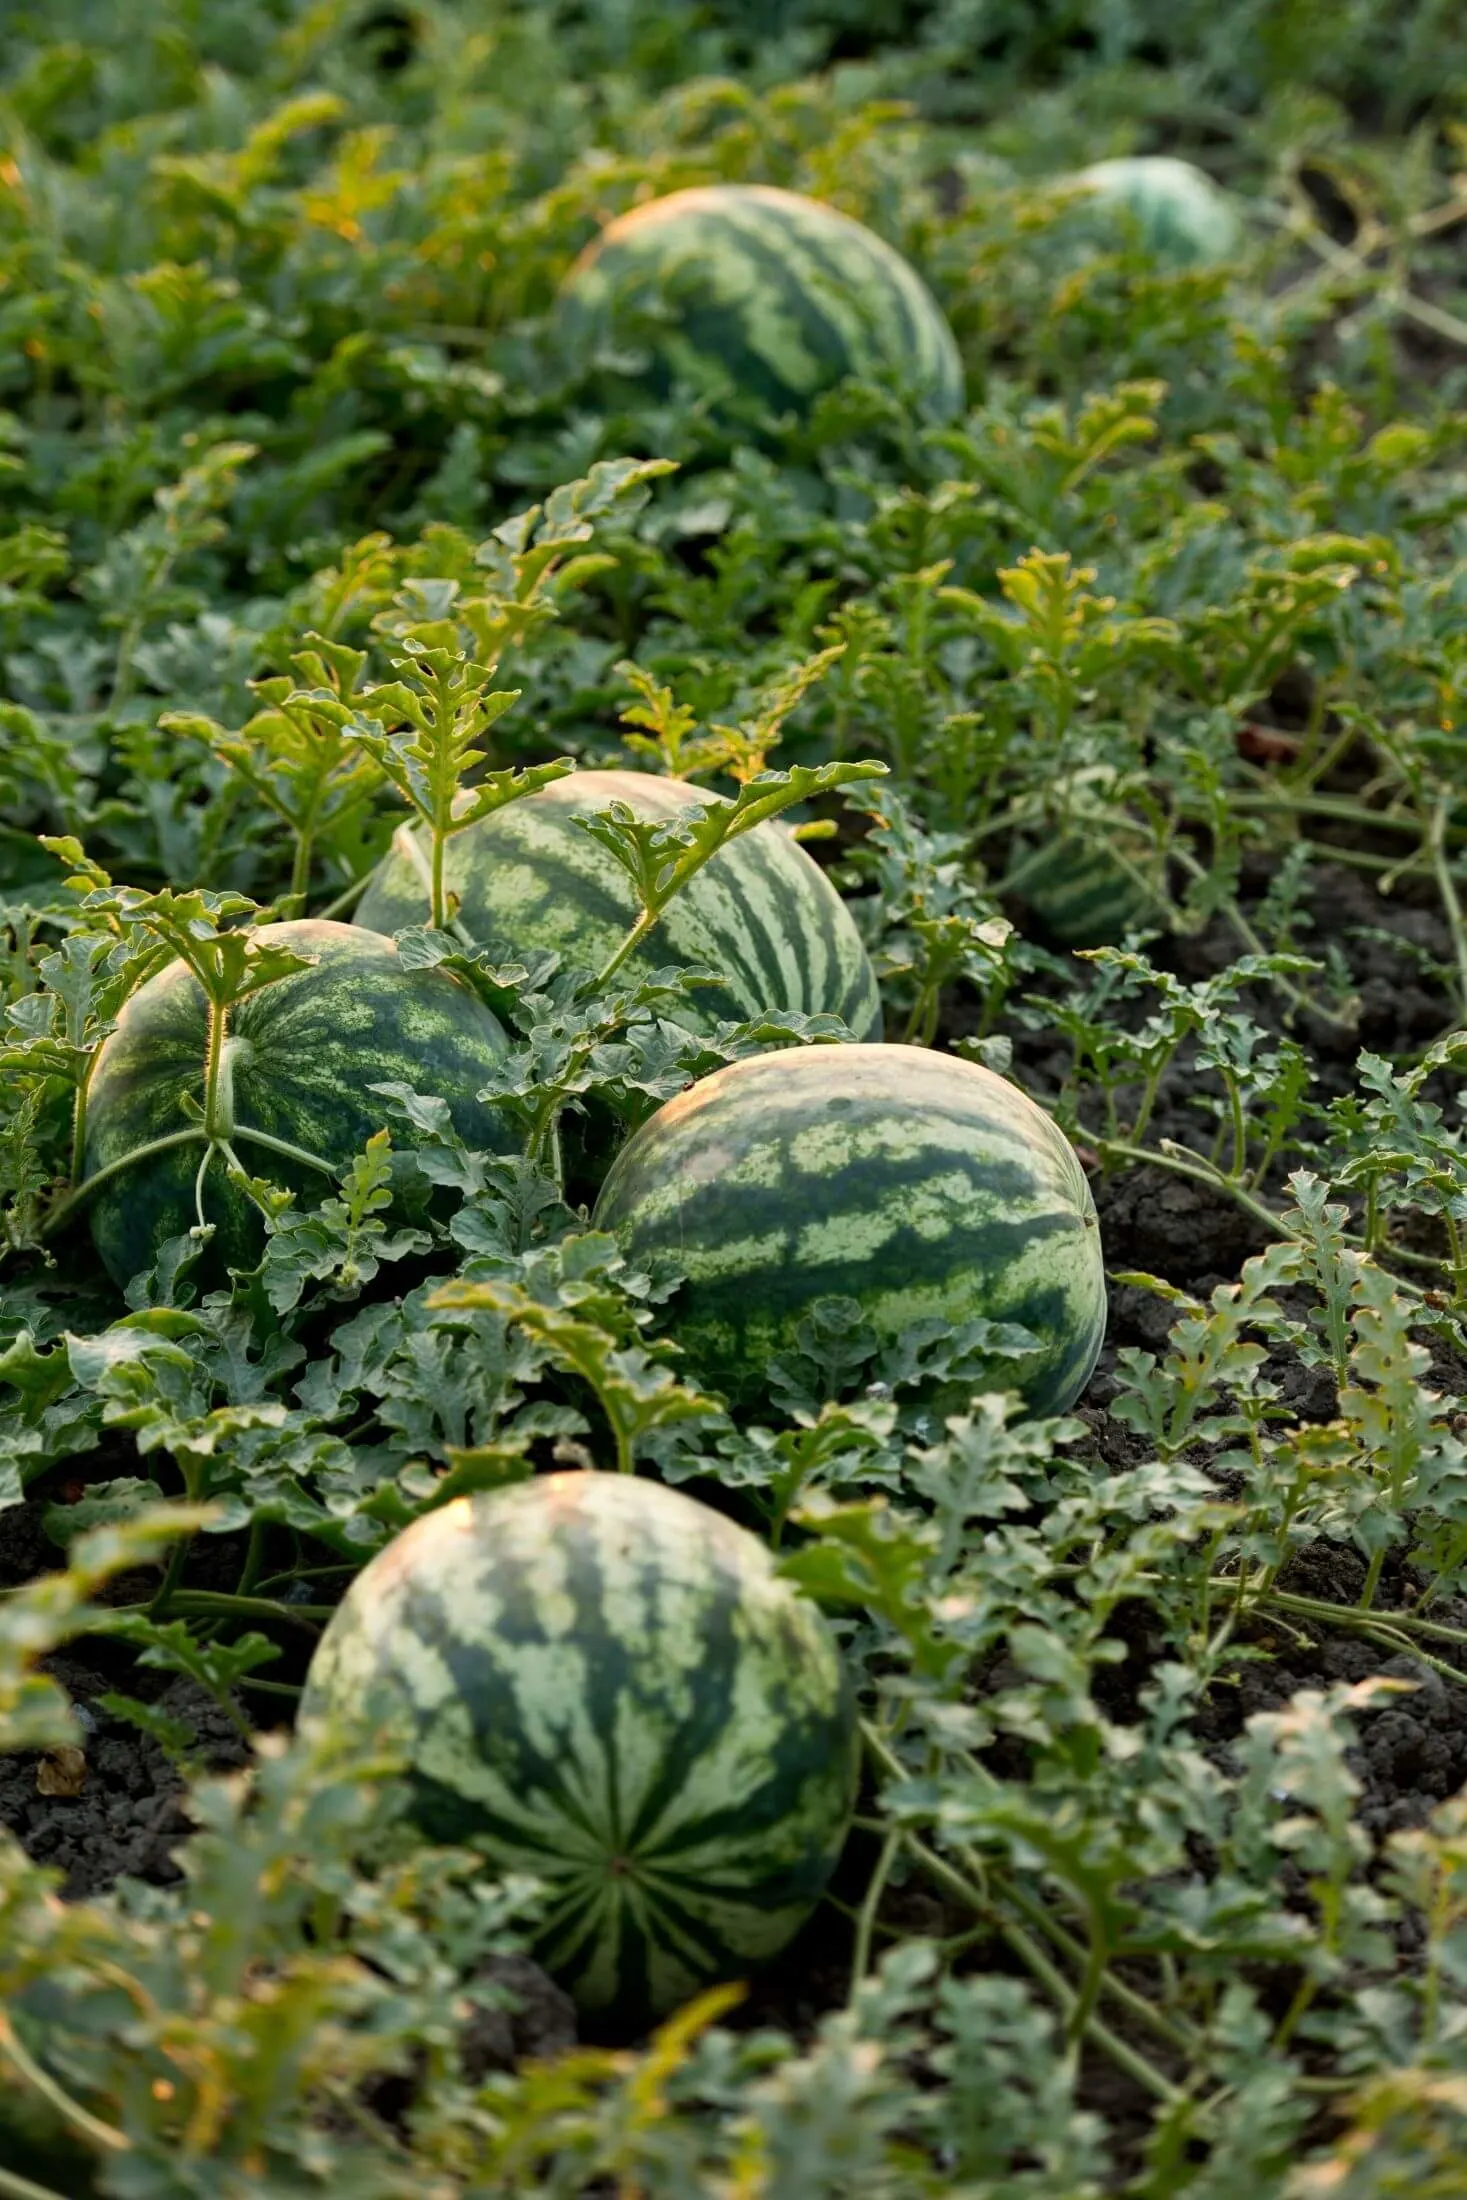 Watermelon plant.